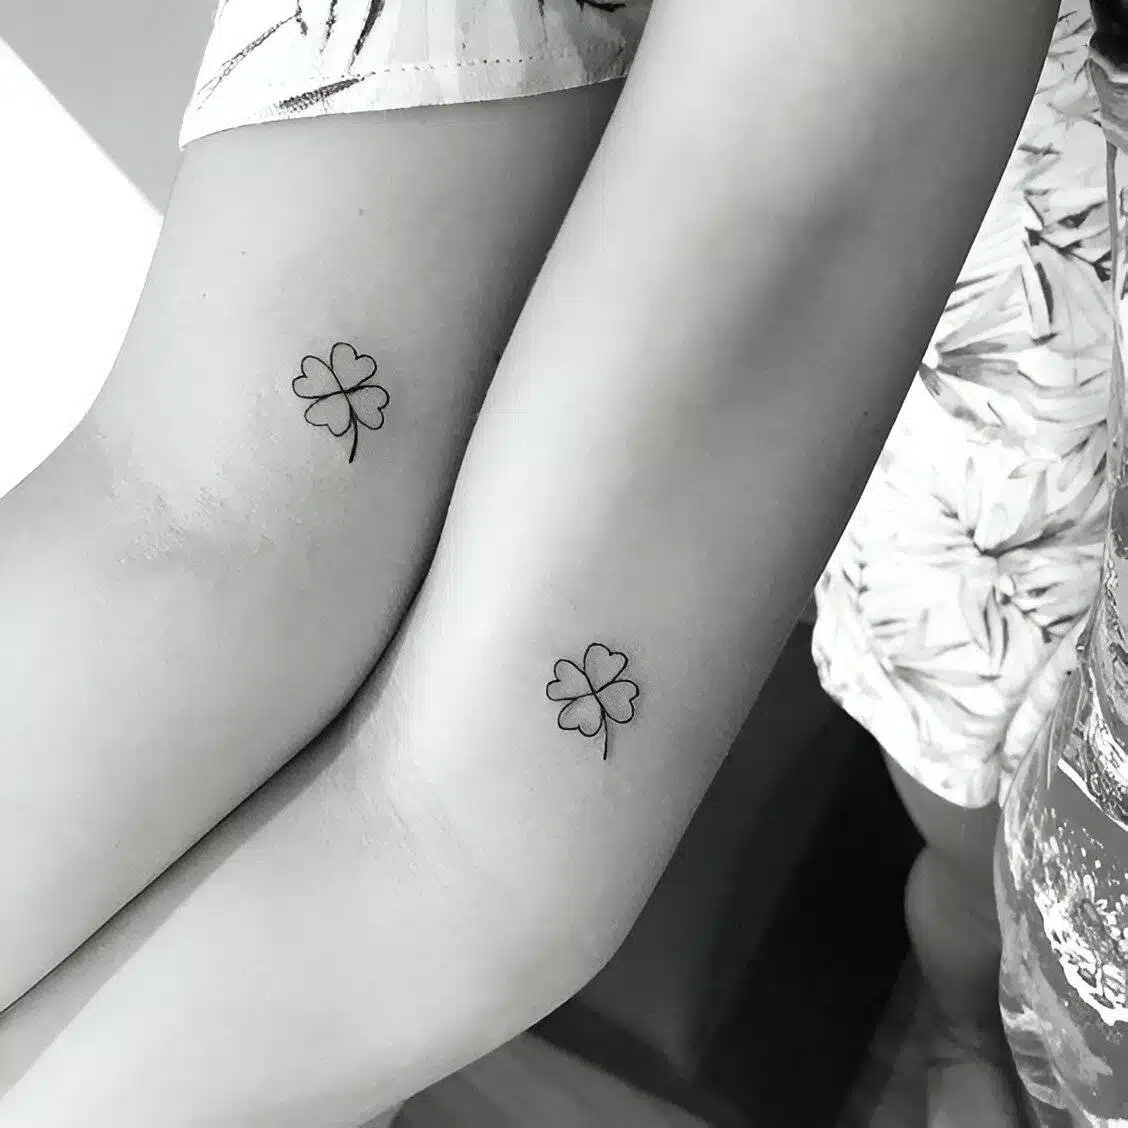 25 Feminine Tattoo Ideas That Are Small But Oh So Pretty - 197